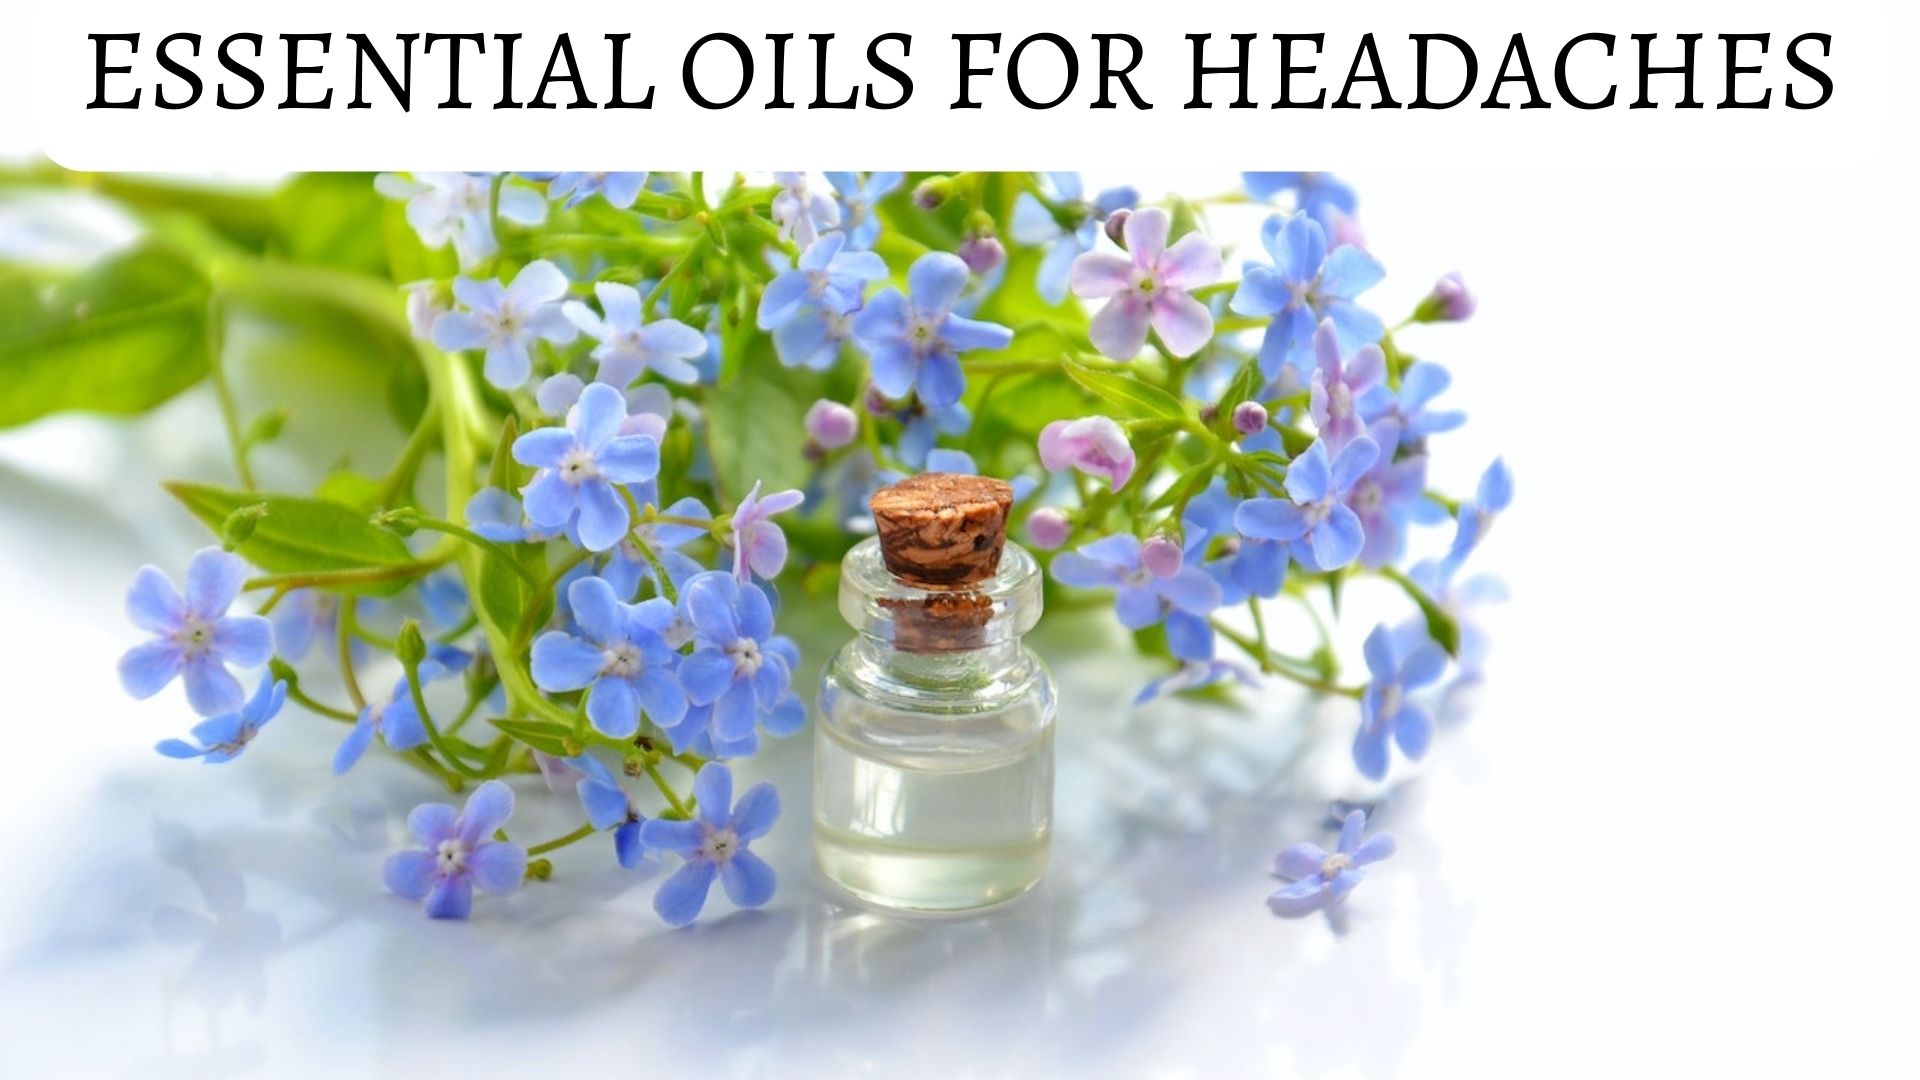 Essential Oils For Headaches - Relieving Migraine Symptoms